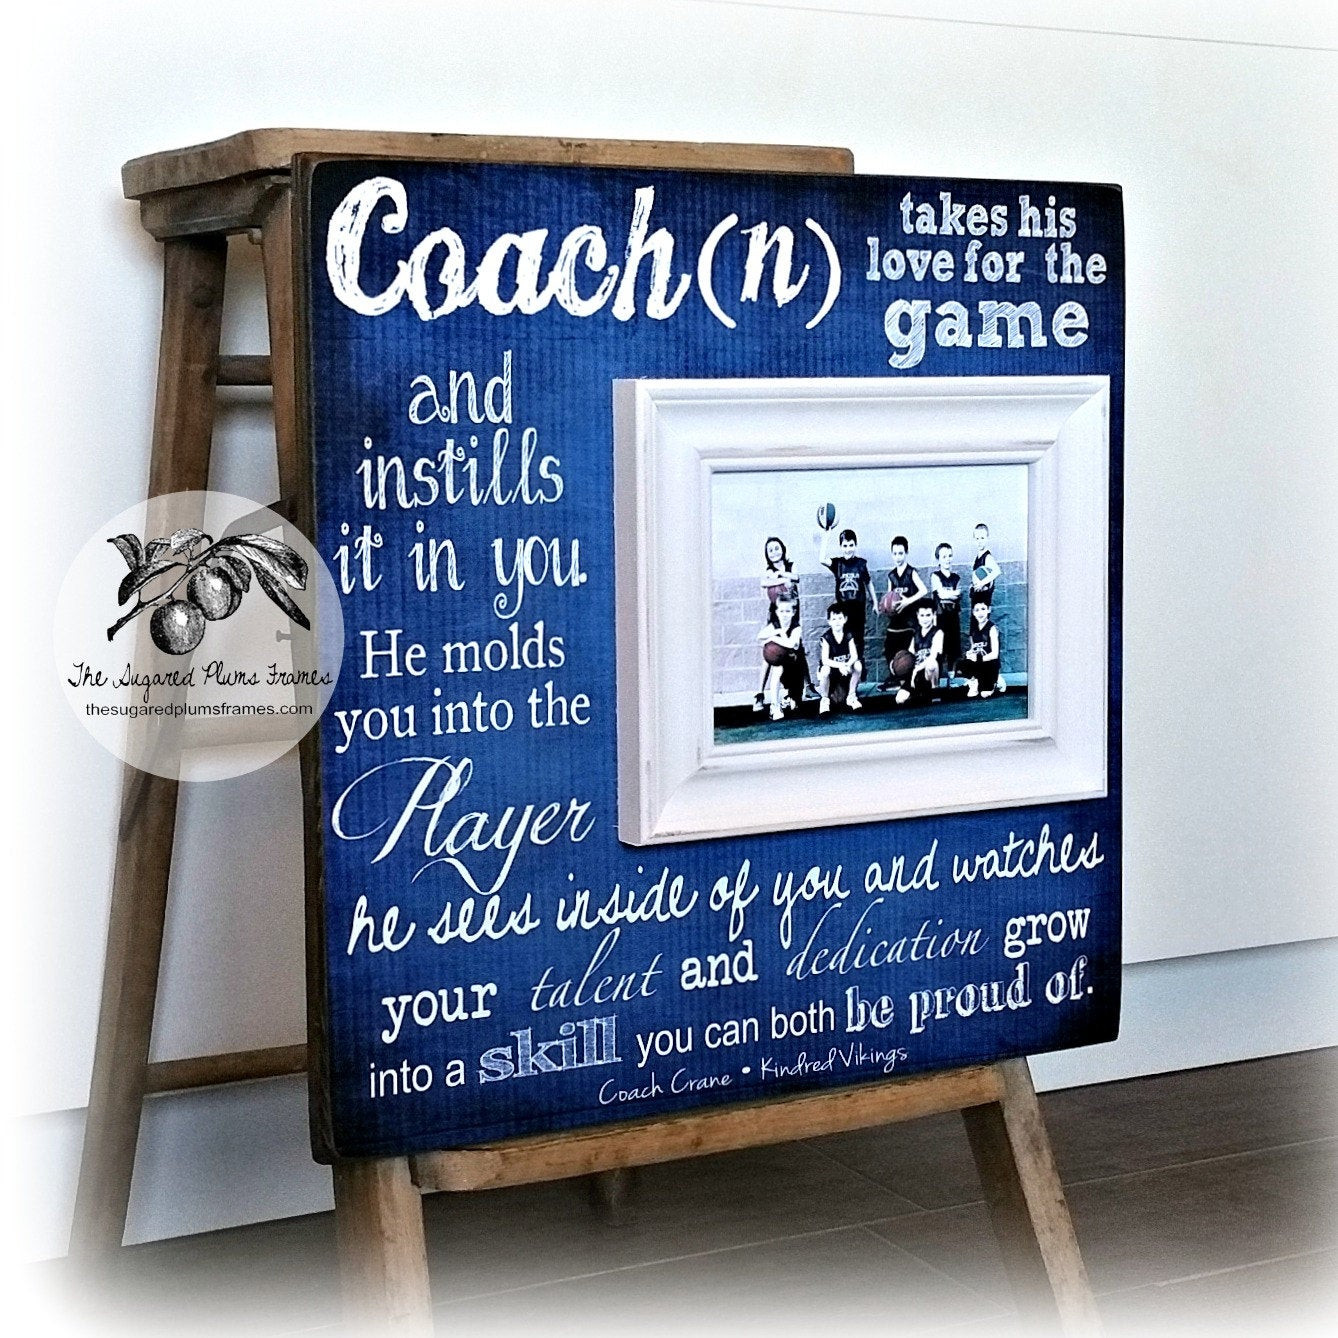 Best ideas about Football Coach Gift Ideas
. Save or Pin Basketball Coach Gift Coach Gift Idea Soccer Coach Now.